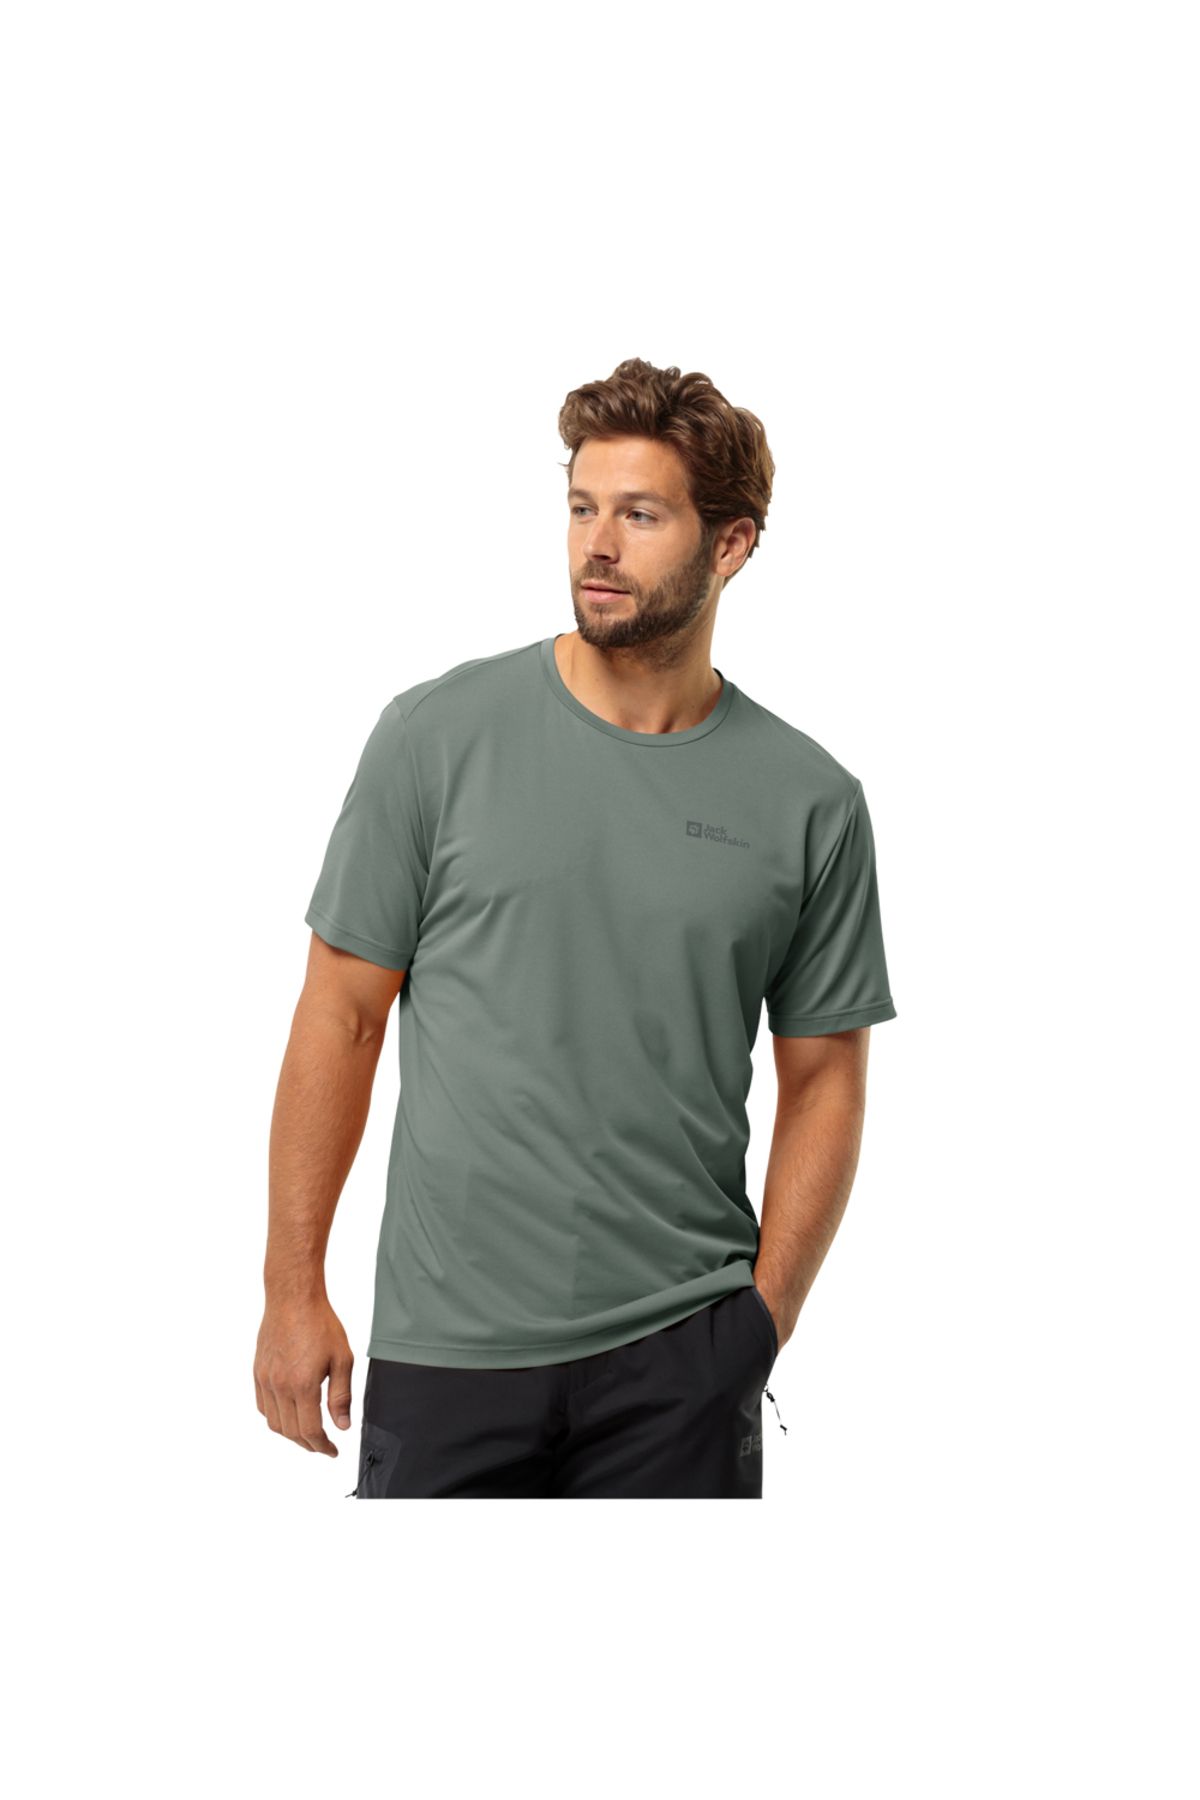 Jack Wolfskin Delgami Erkek Kısa Kollu T-Shirt